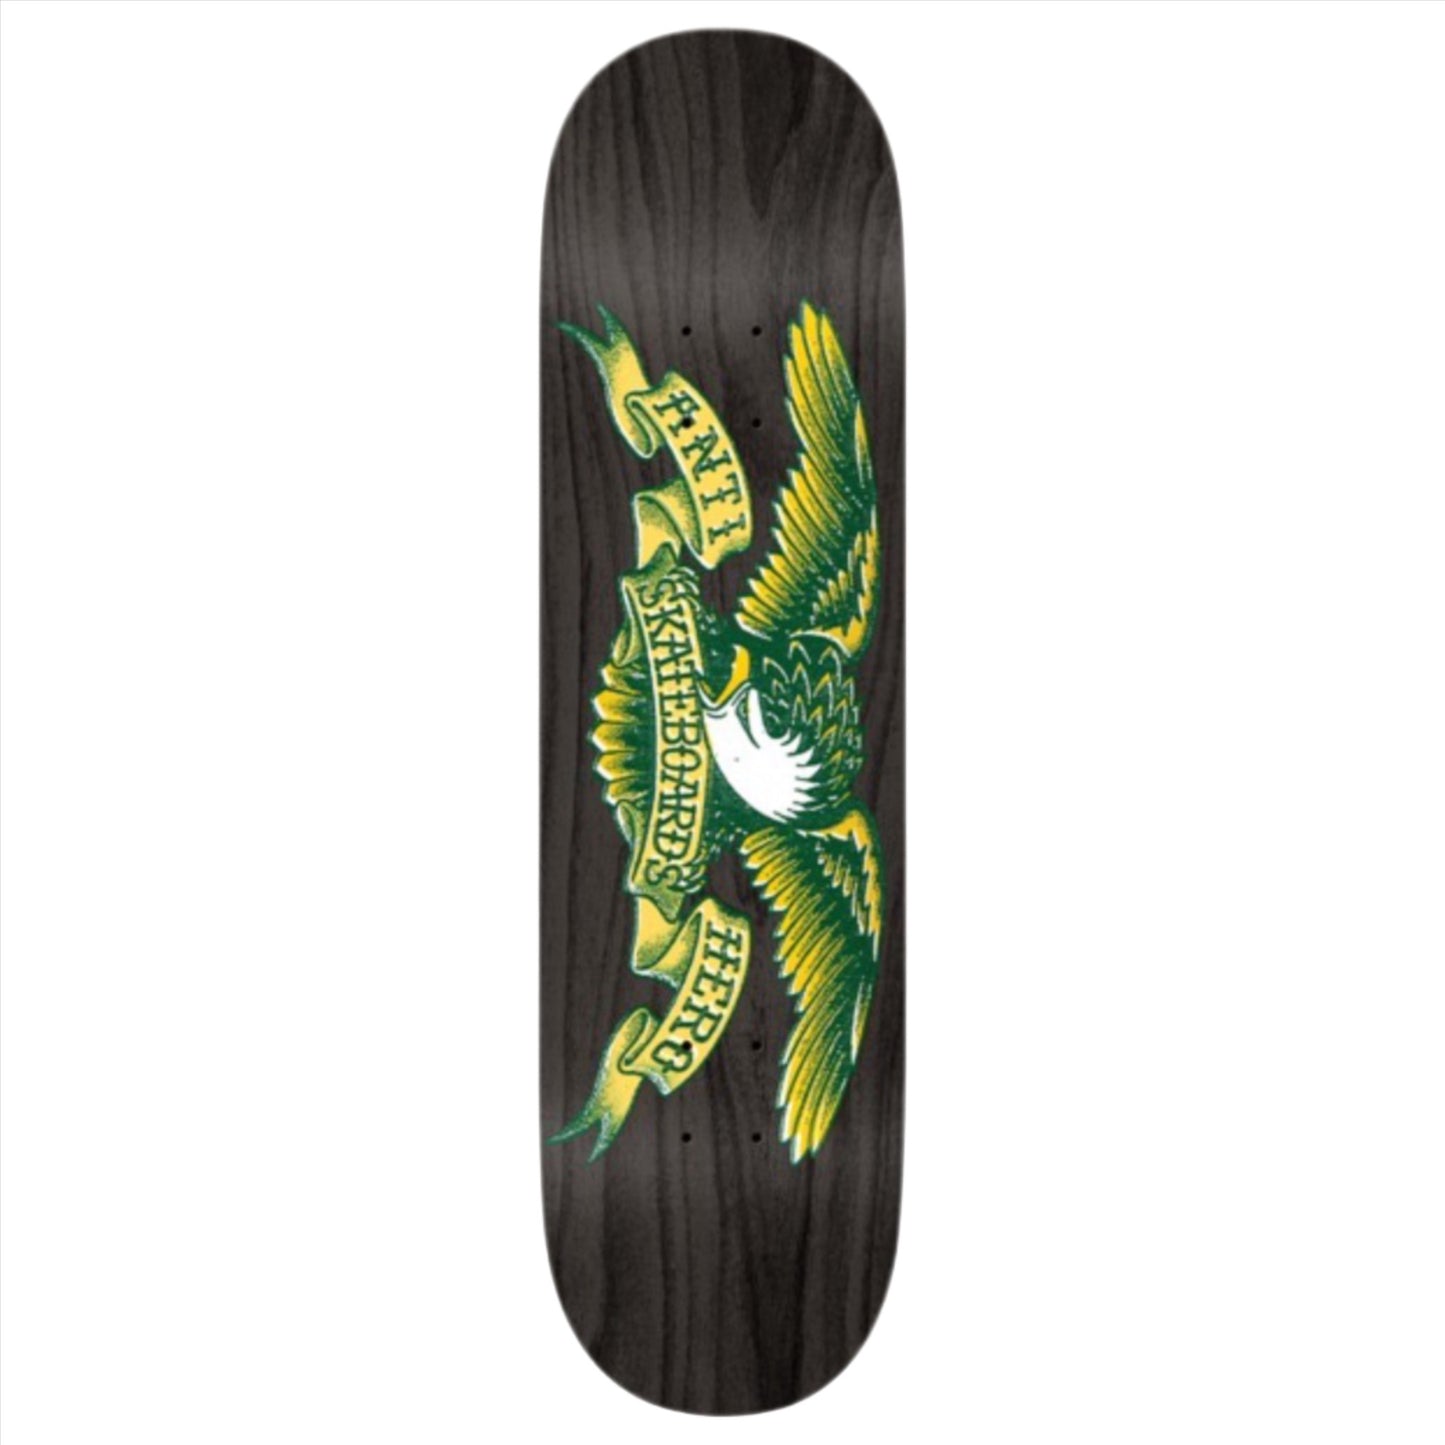 Anti hero Skateboards Misregist Eagle II 8.25 Deck